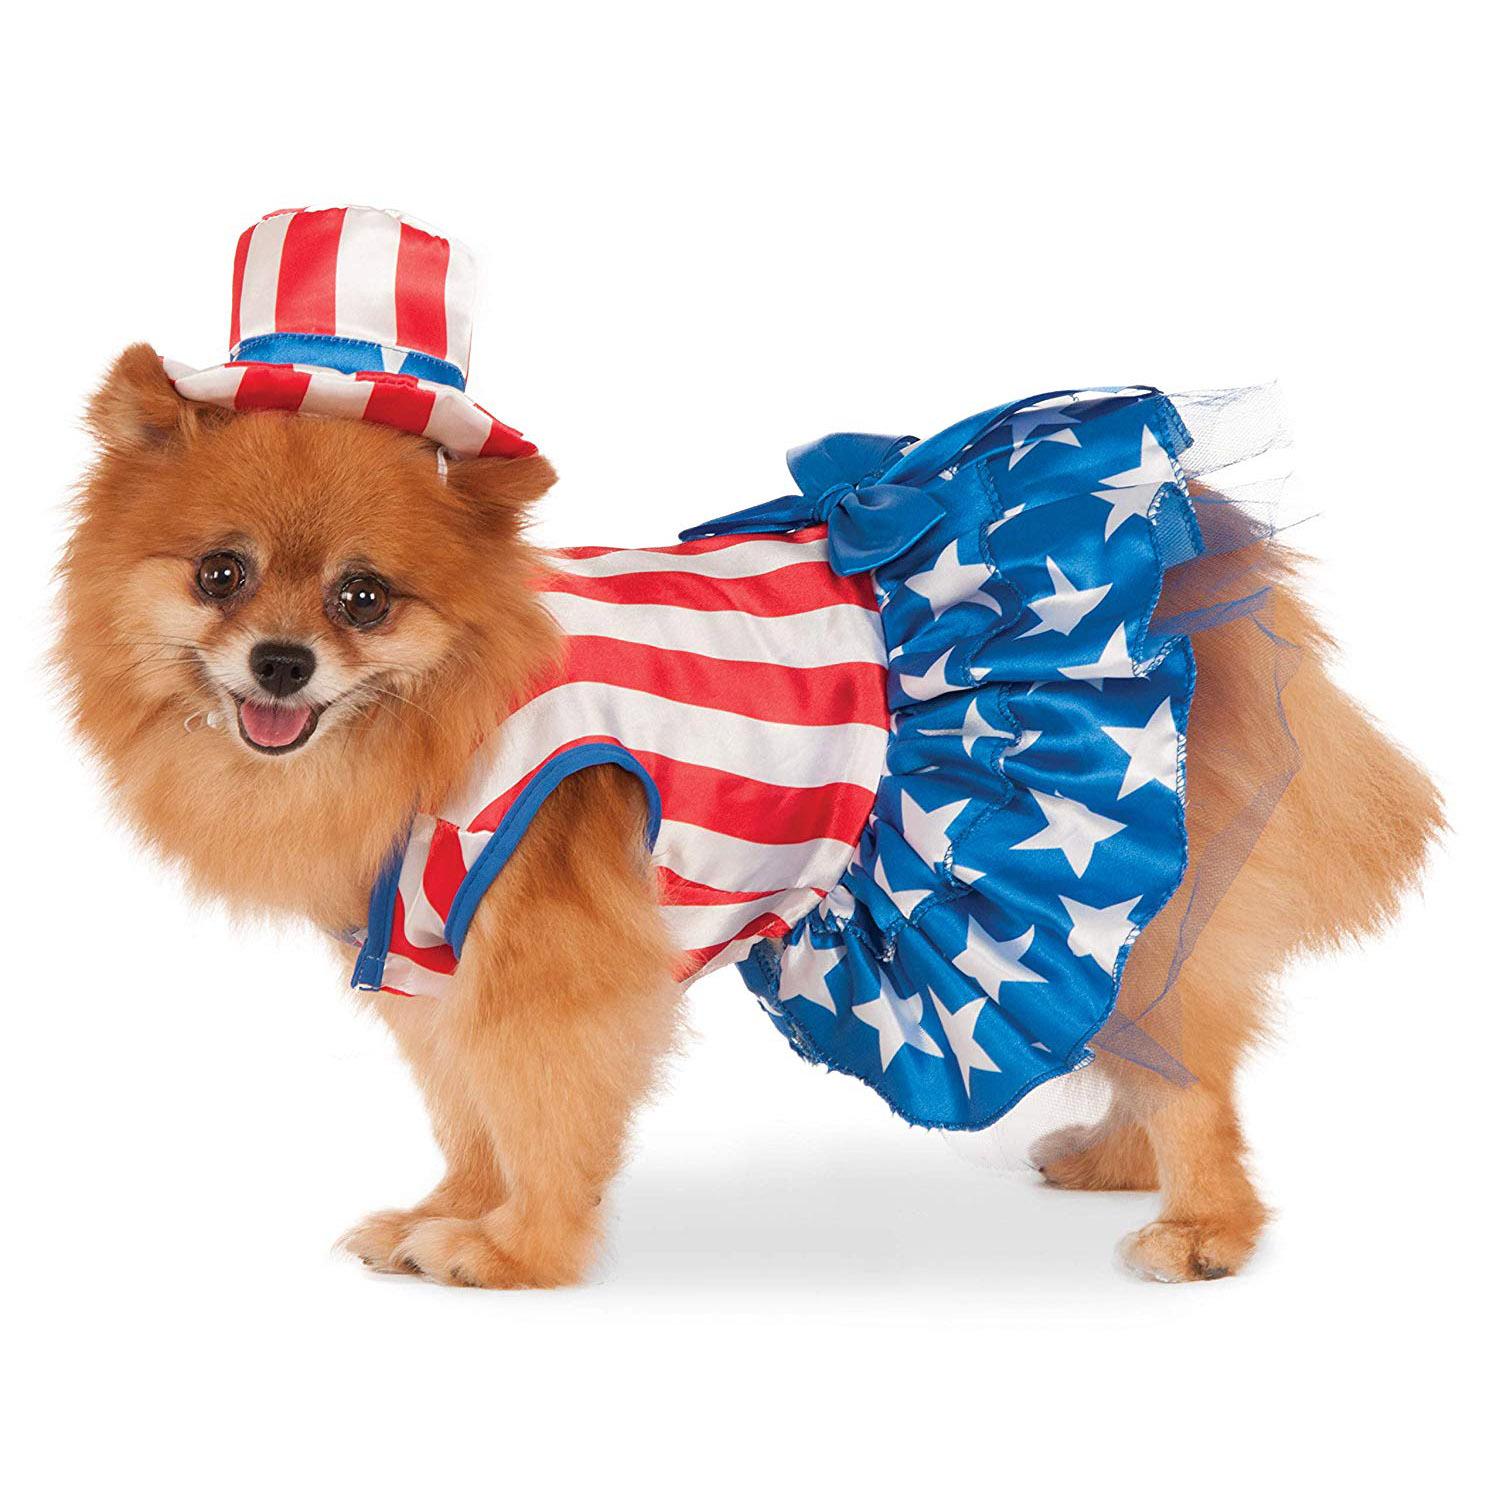 Patriotic Pooch Dog Dress by Rubie's Costumes